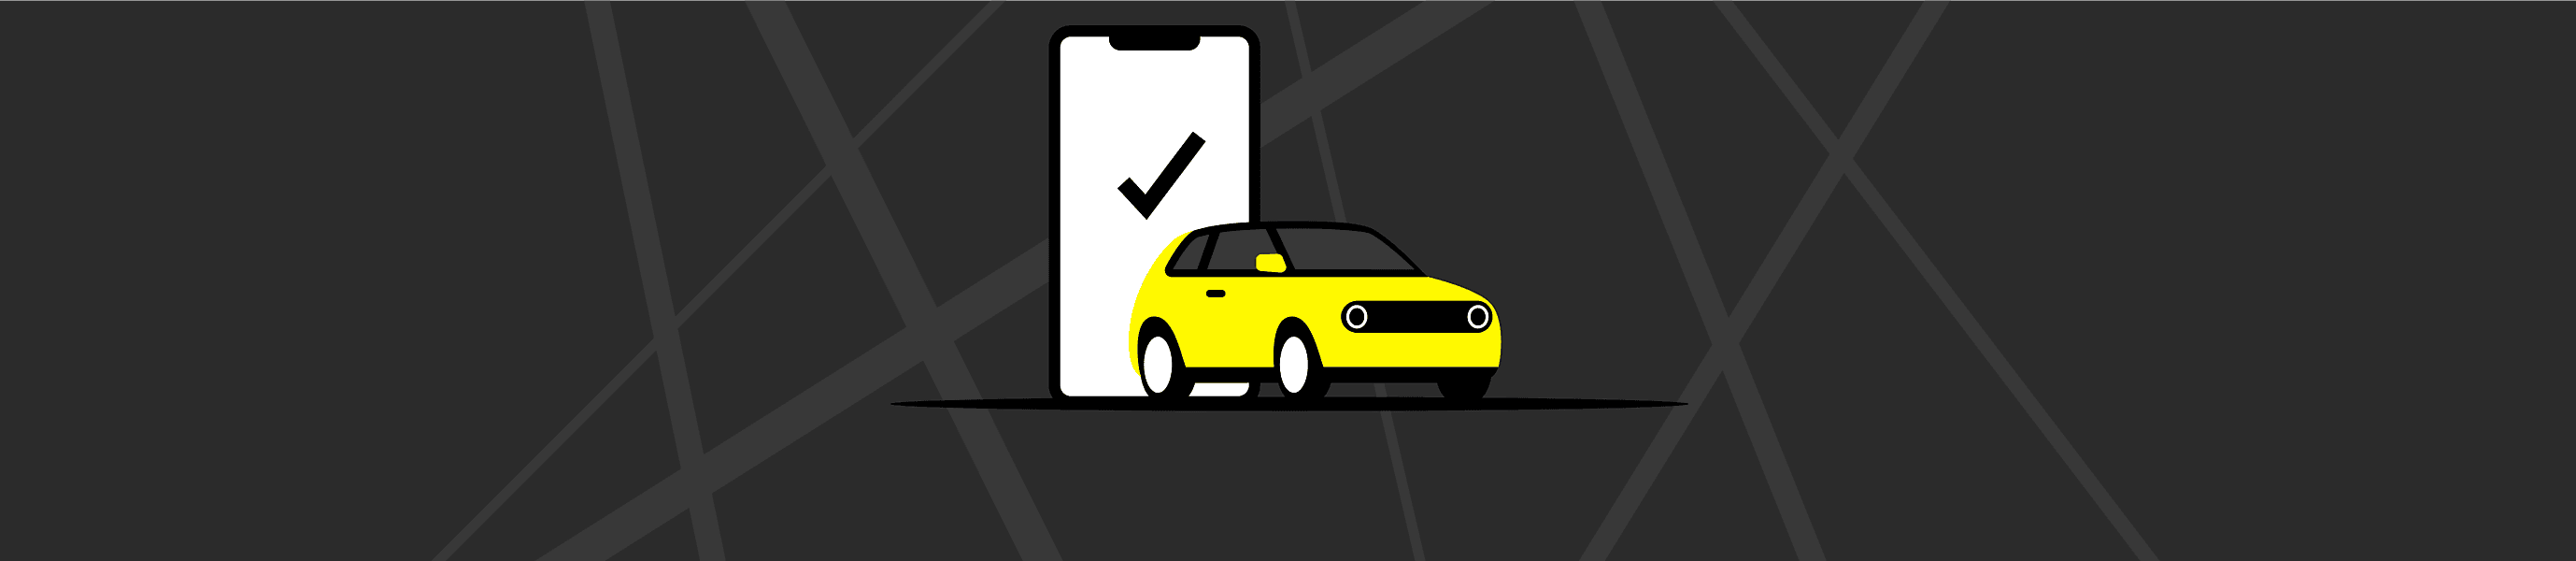 How To Create An App Like Uber/OLA